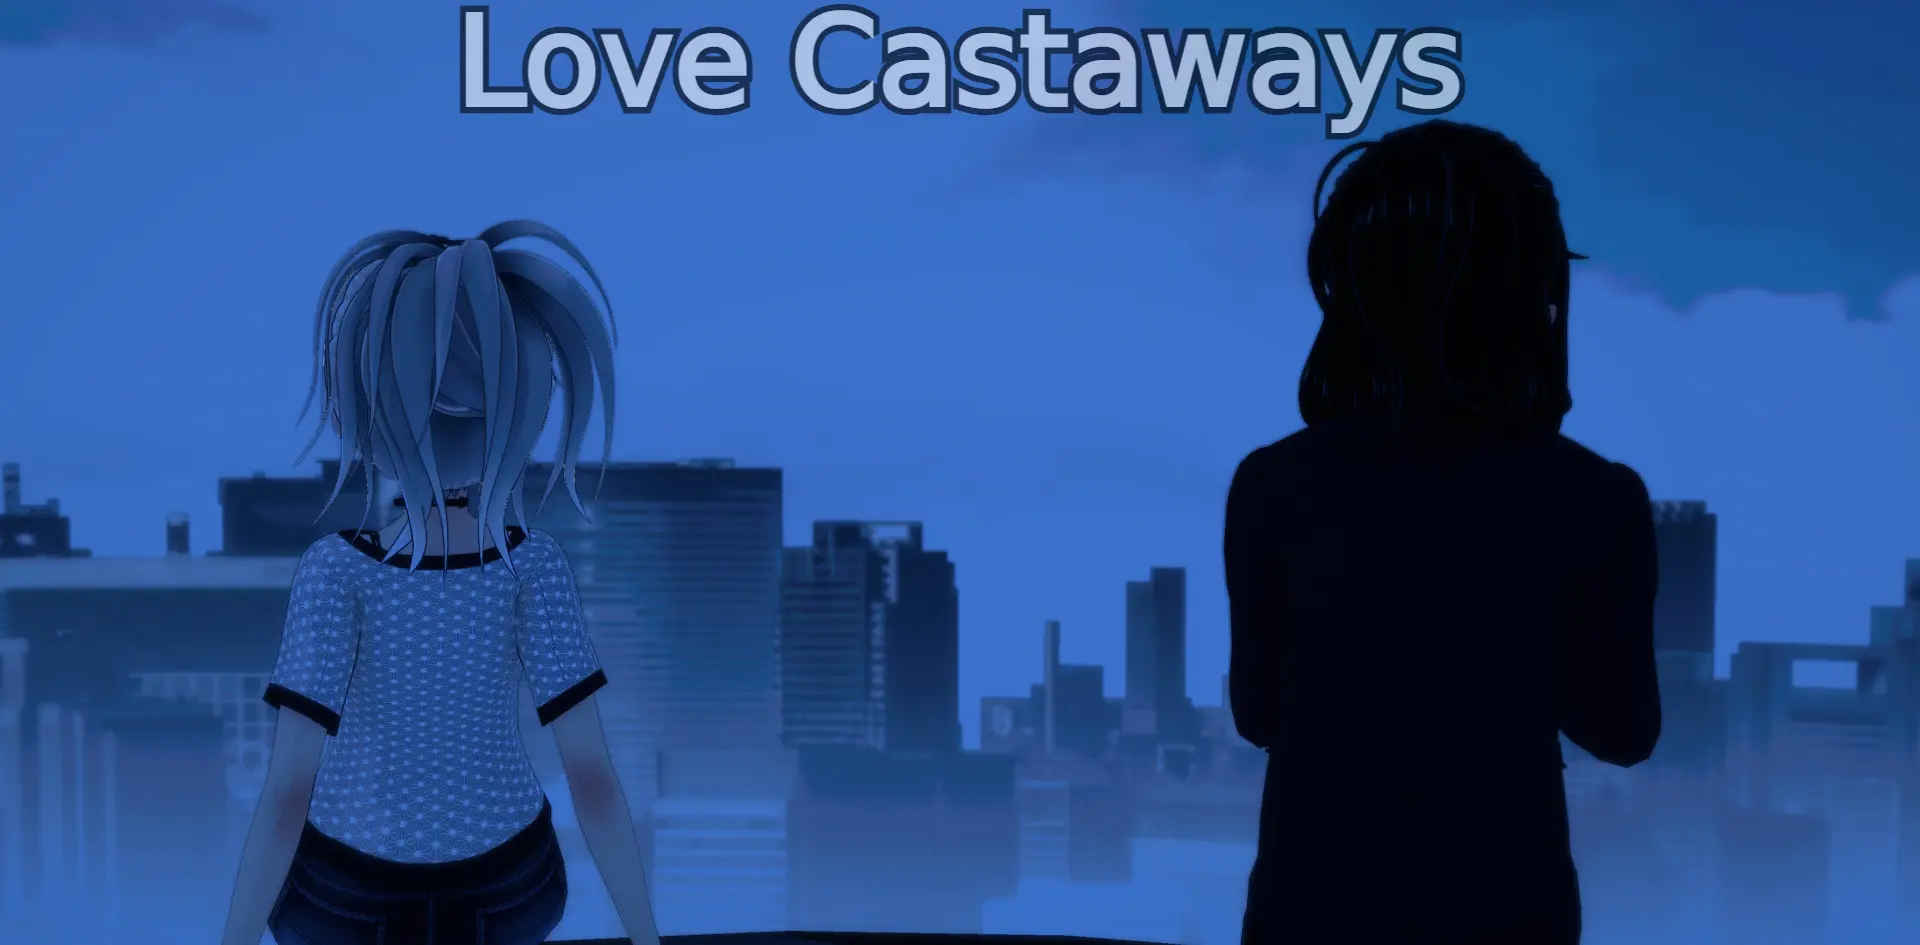 Love Castaways main image